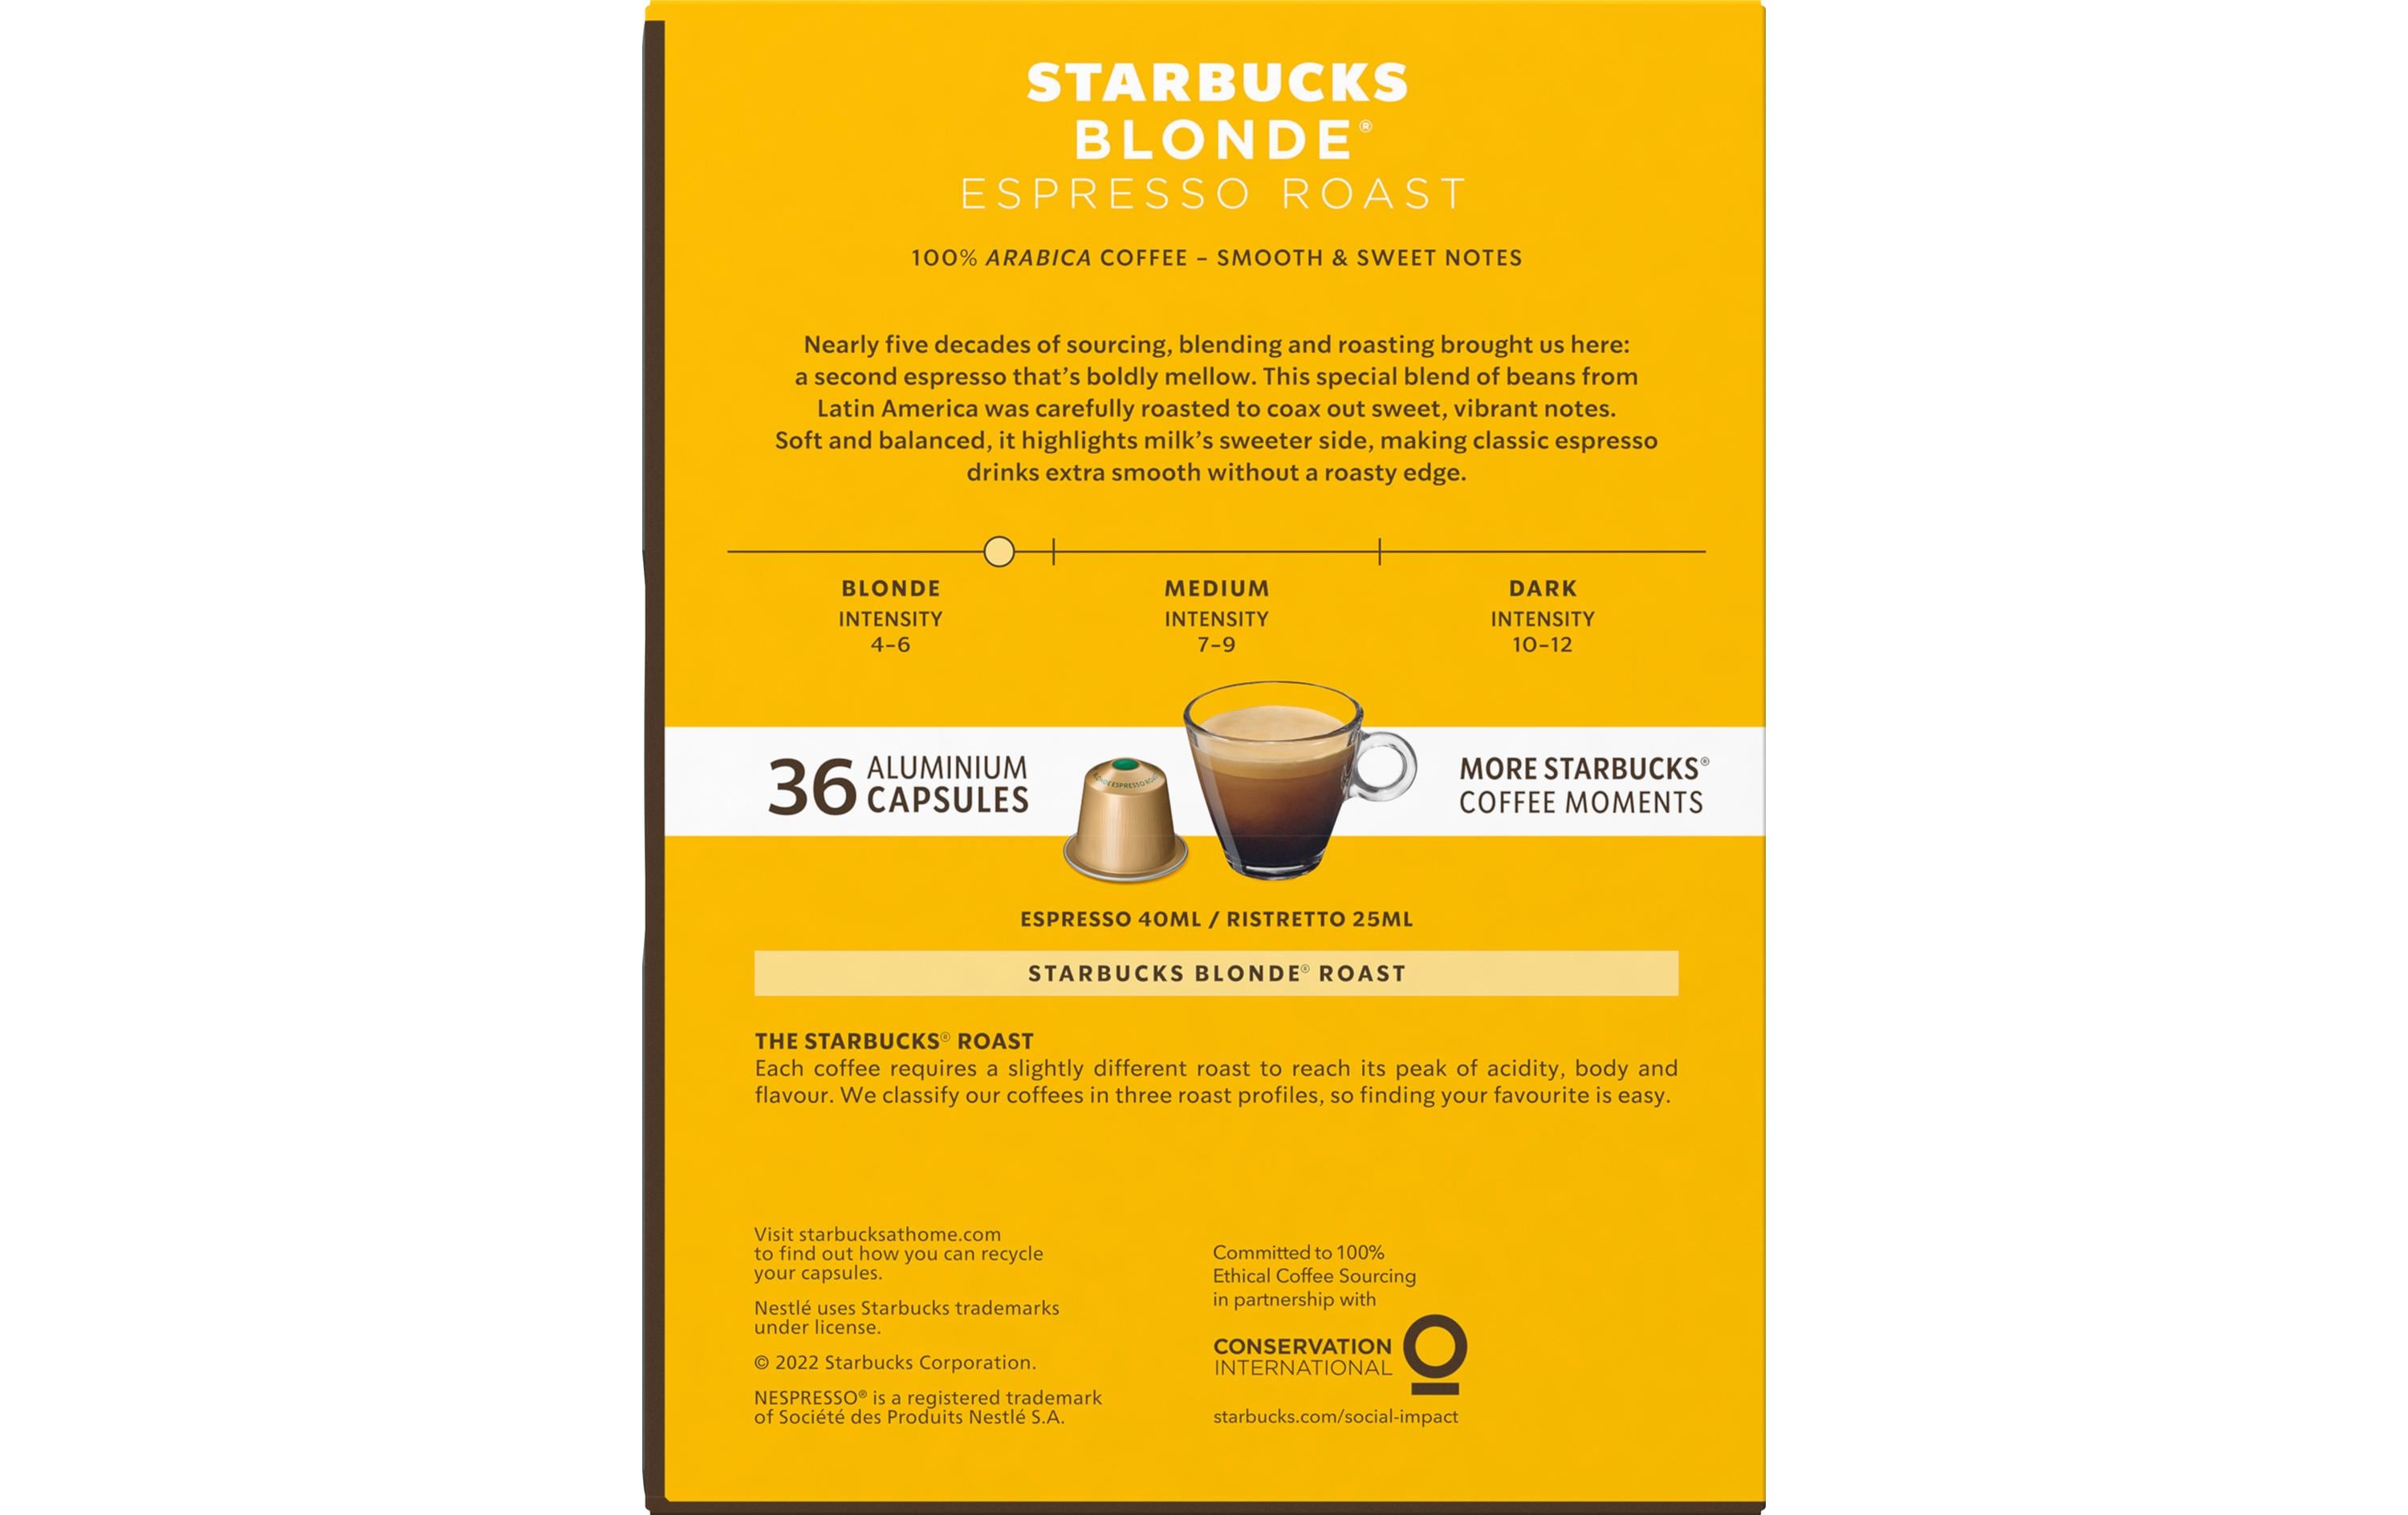 Starbucks Kaffeekapseln Blonde Espresso Roast 36 Stück